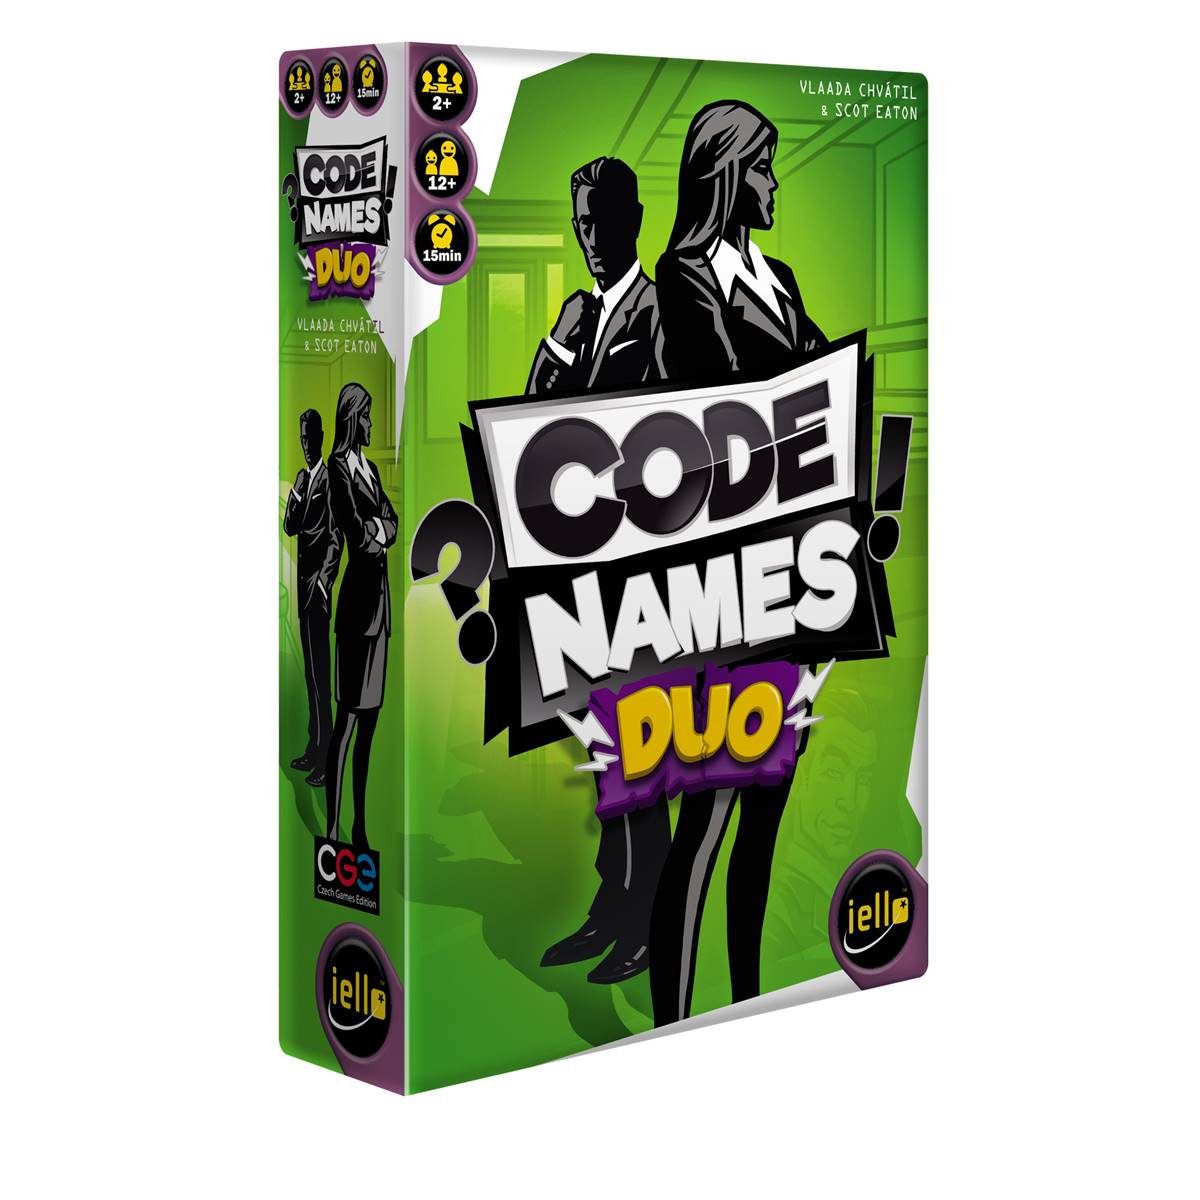 51472-IELLO---Codenames-Duo_1x1200.jpg